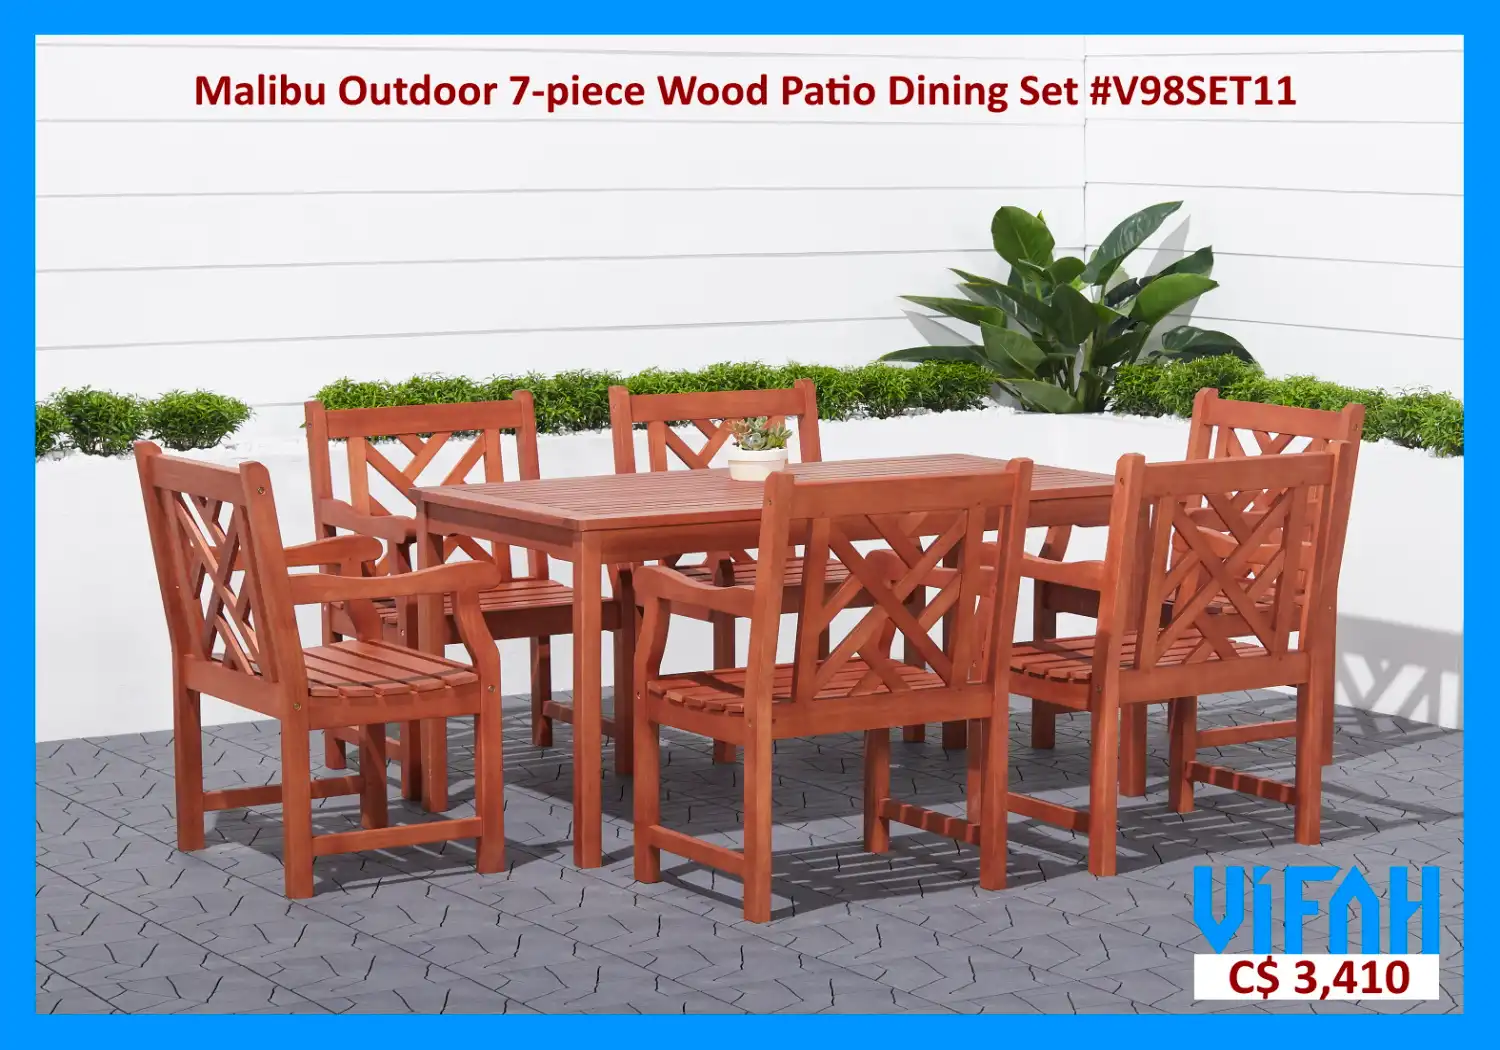 MALIBU Outdoor #V98SET11 7-piece Wood Patio Dining Set